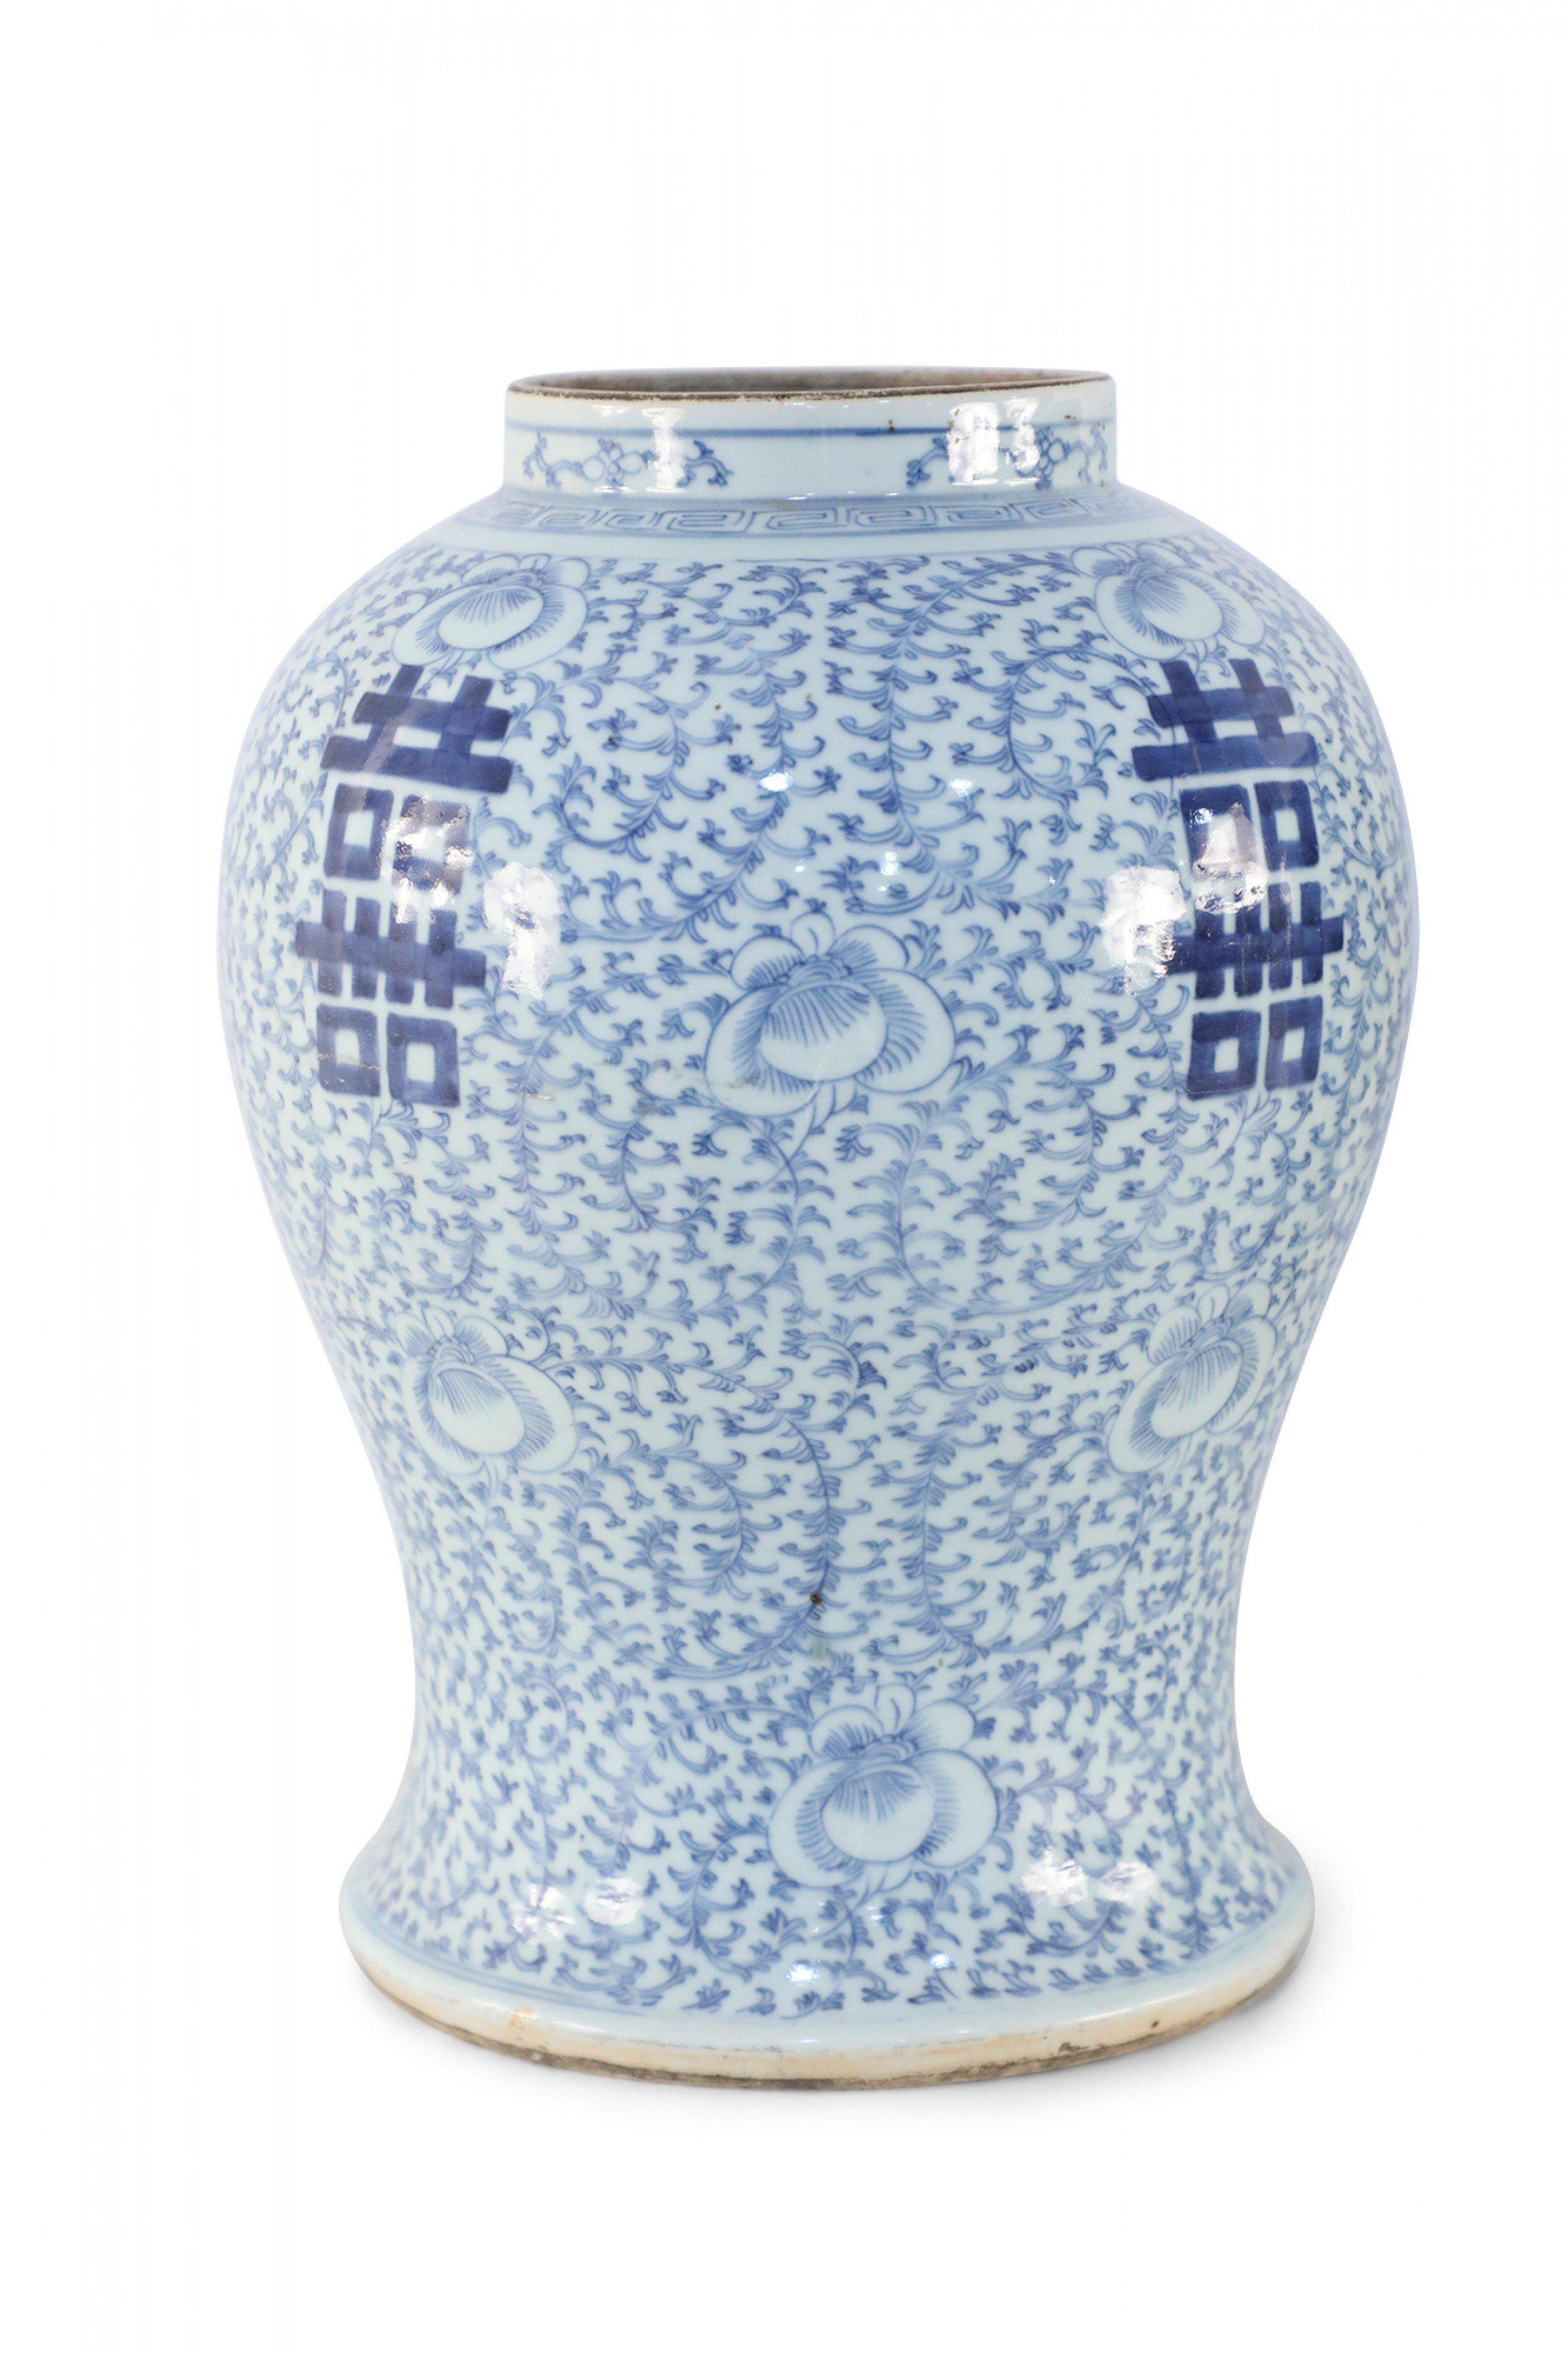 Chinese Off-White and Light Blue Vine Motif Porcelain Urn Vase For Sale 2